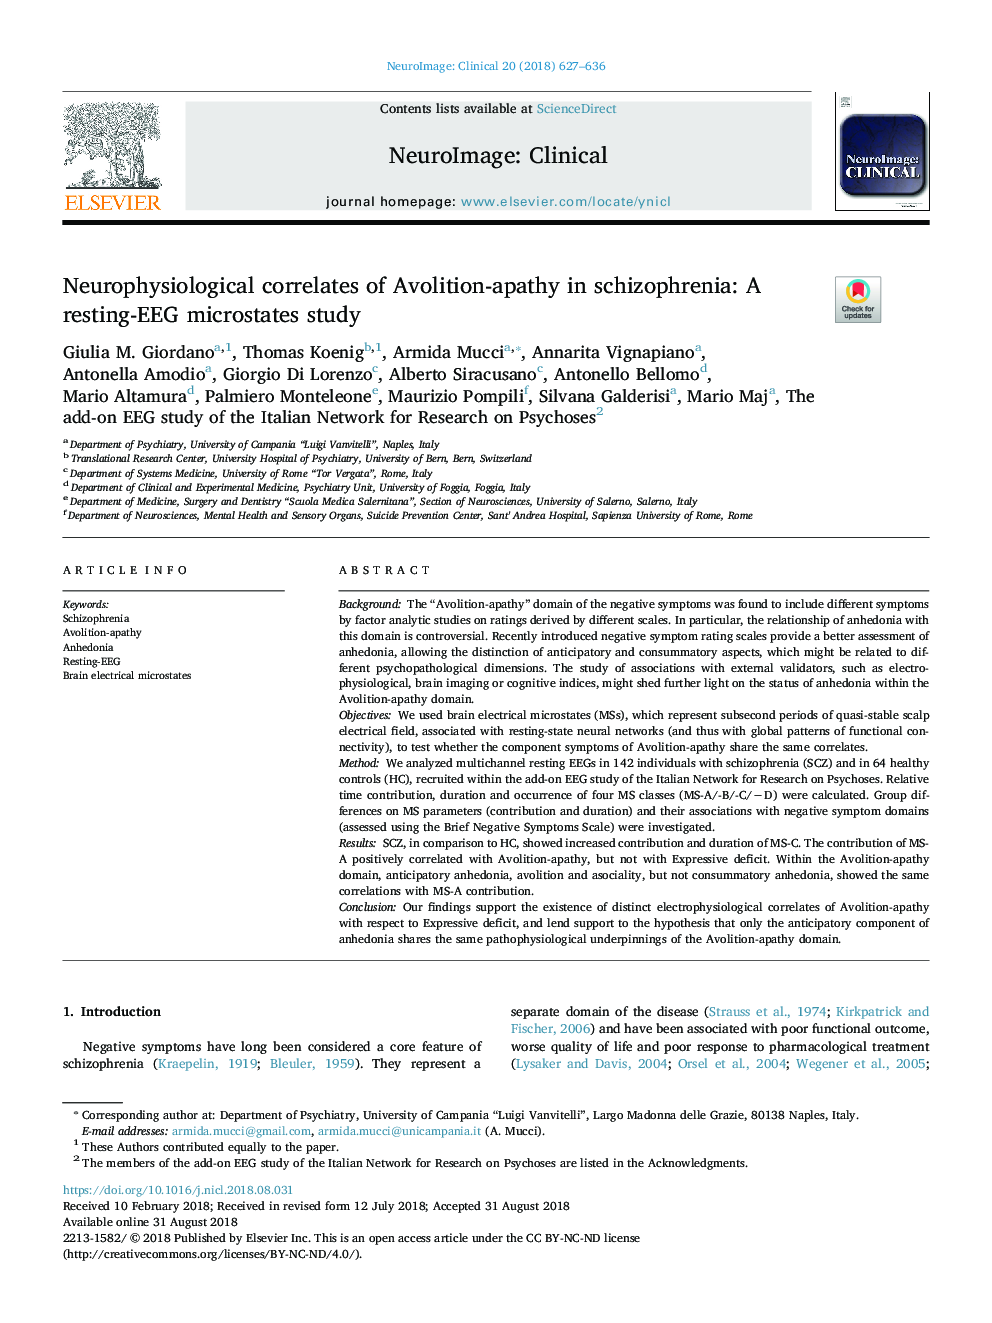 Neurophysiological correlates of Avolition-apathy in schizophrenia: A resting-EEG microstates study